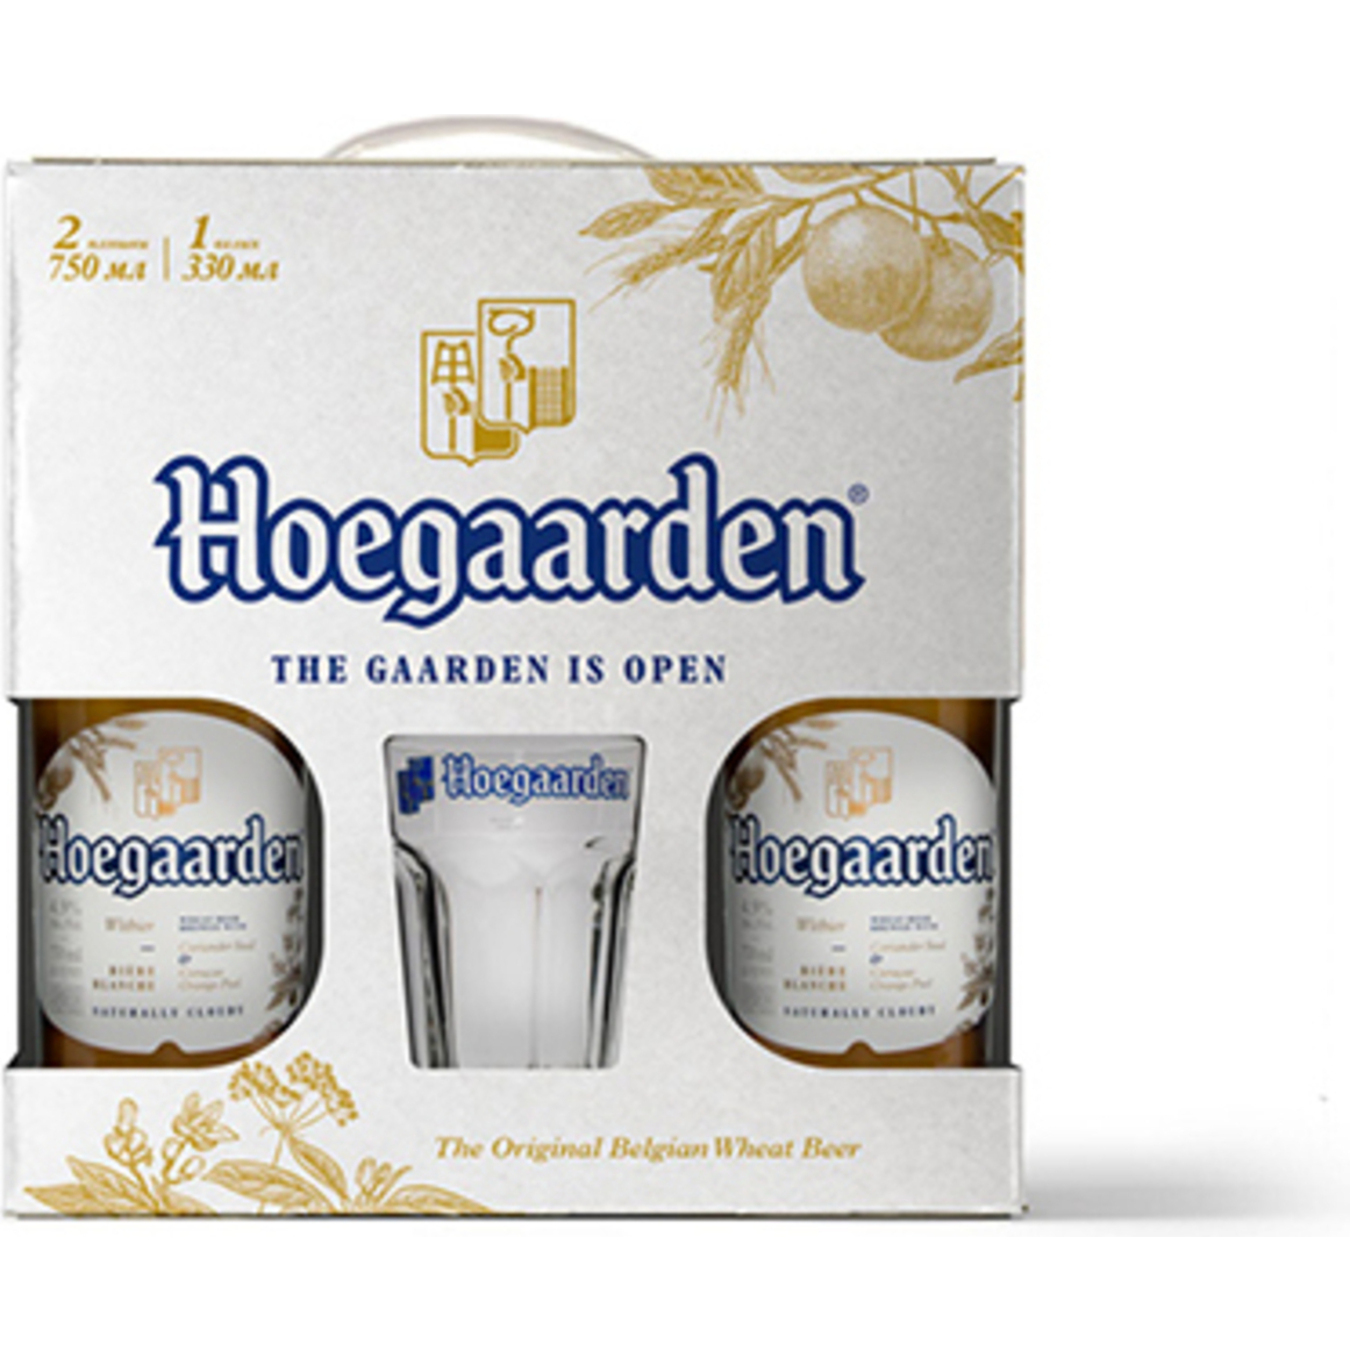 Пиво Hoegaarden White світле нефільтроване 2шт 0.75л + келих 0.33л